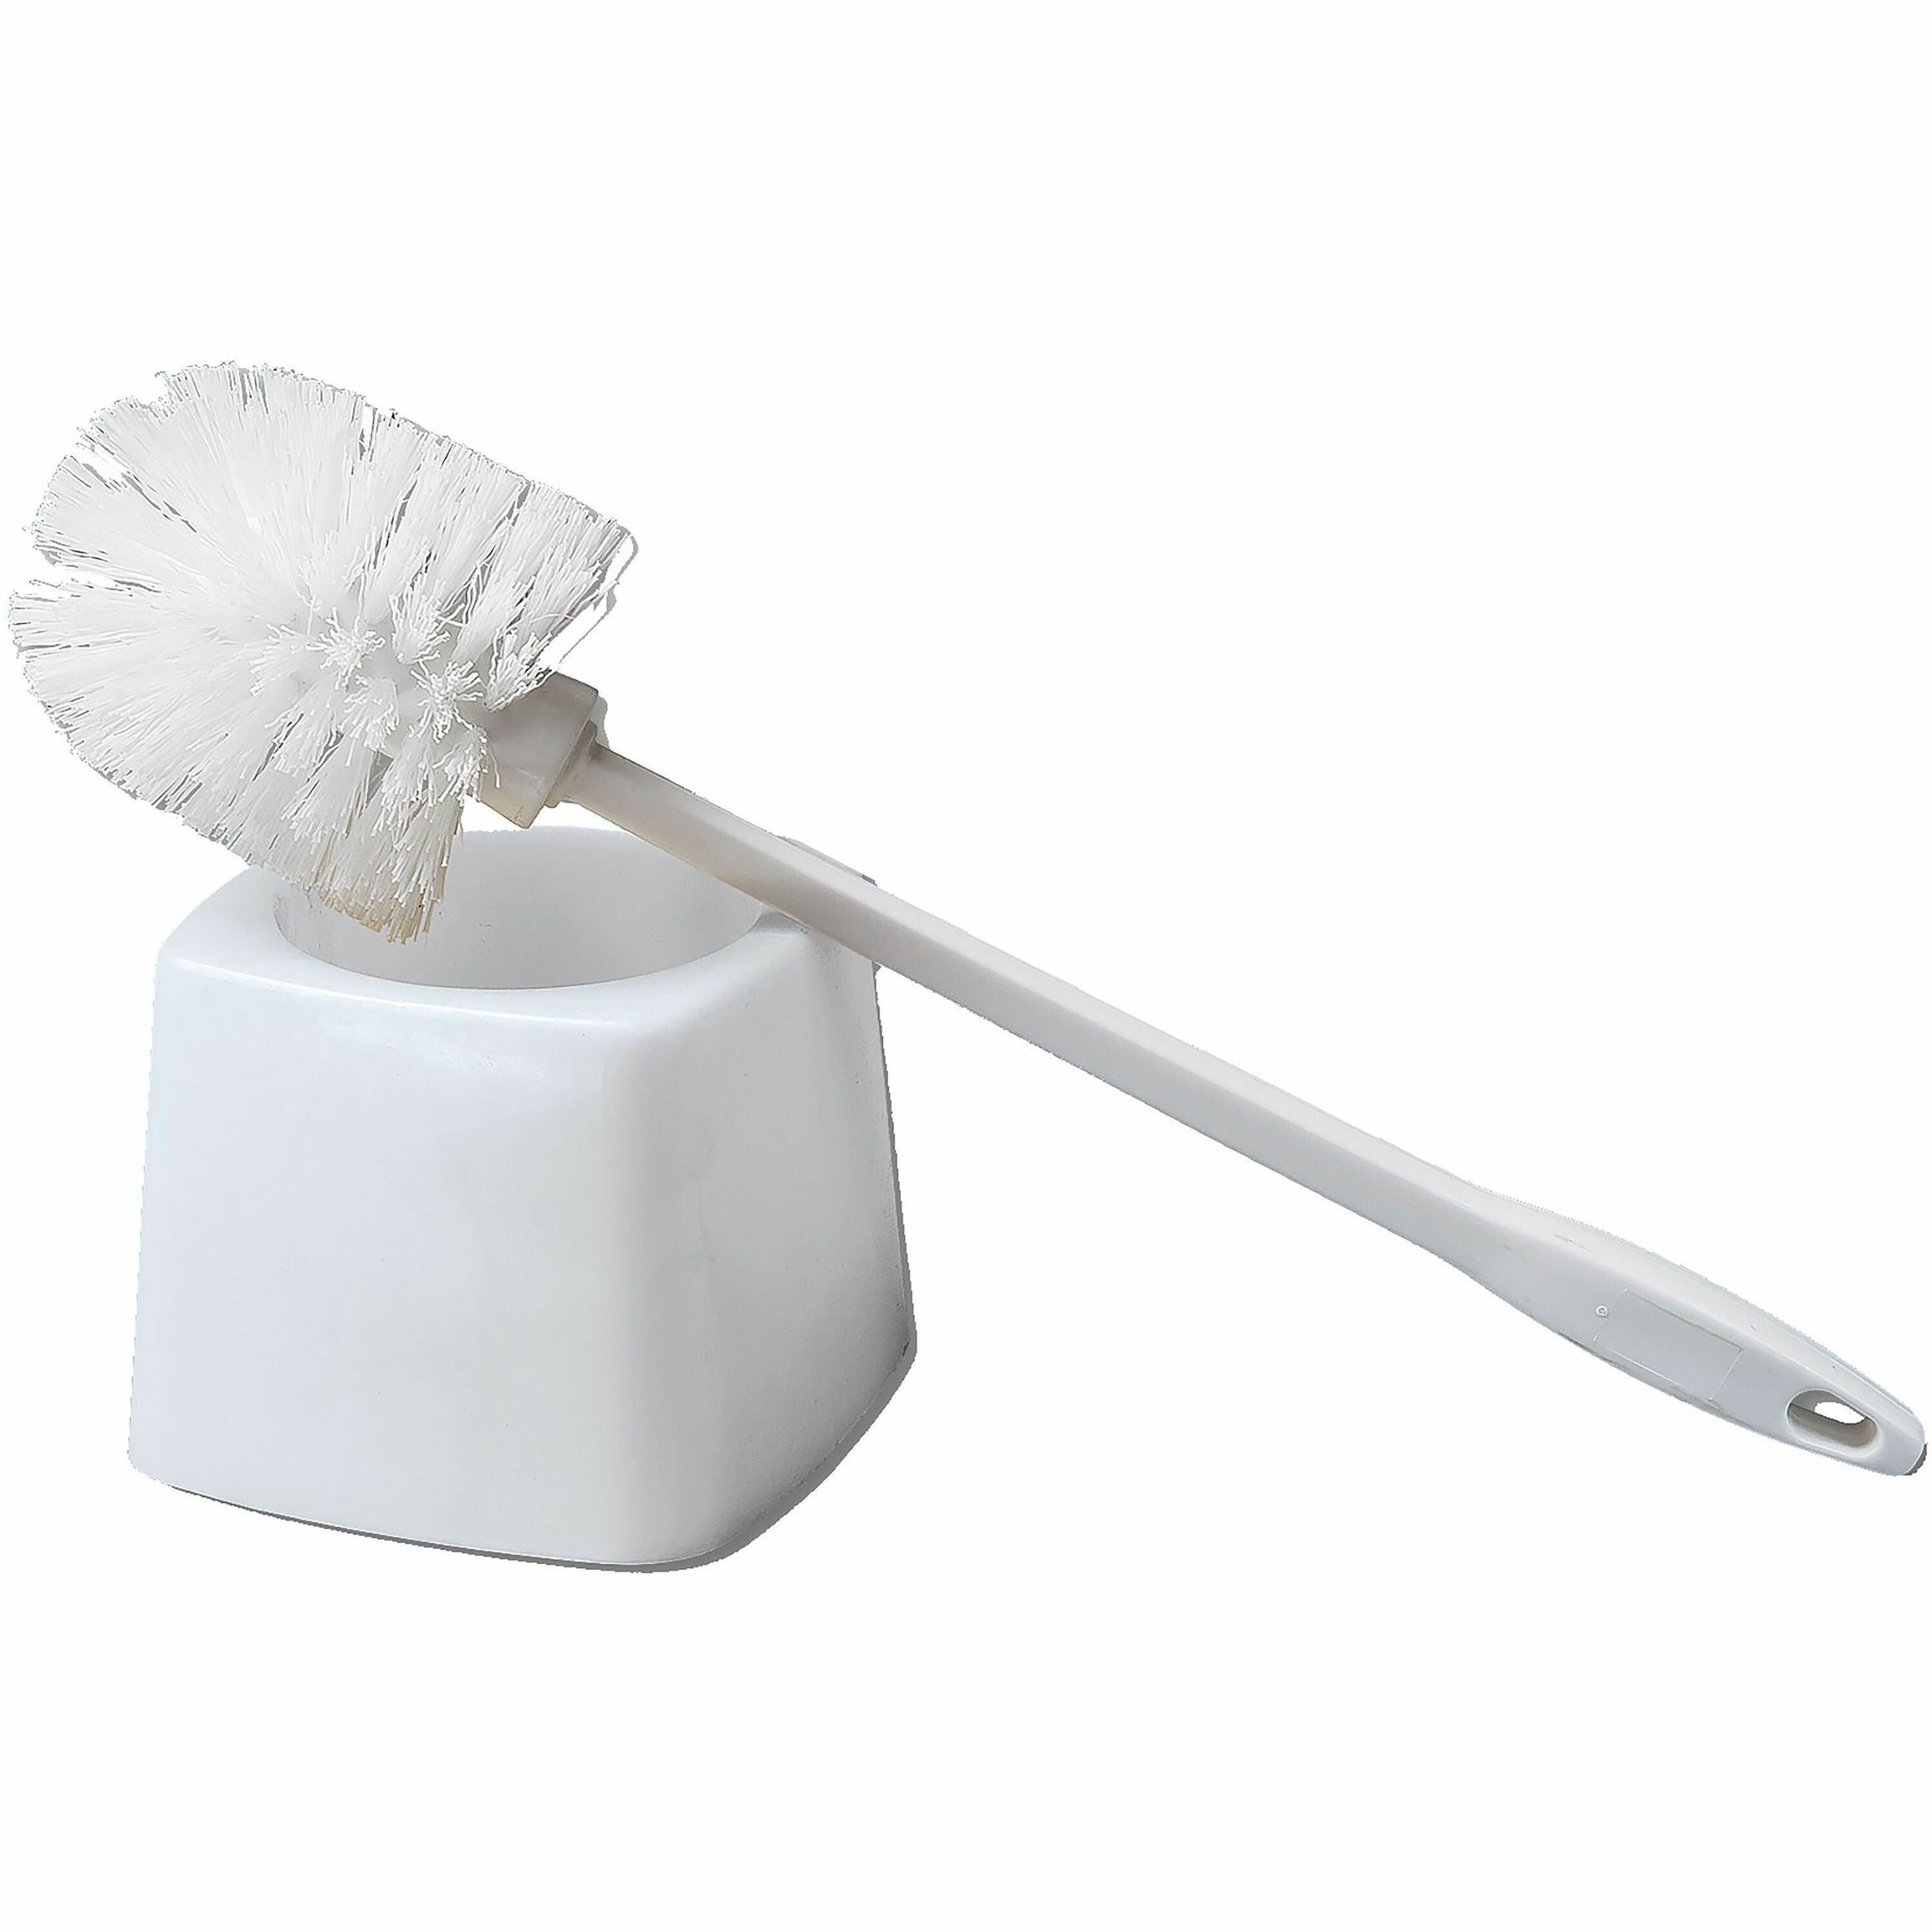 Vileda Professional Professional Plastic Bowl Brush and Holder - Polypropylene, Plastic - White - 1 Each - 1